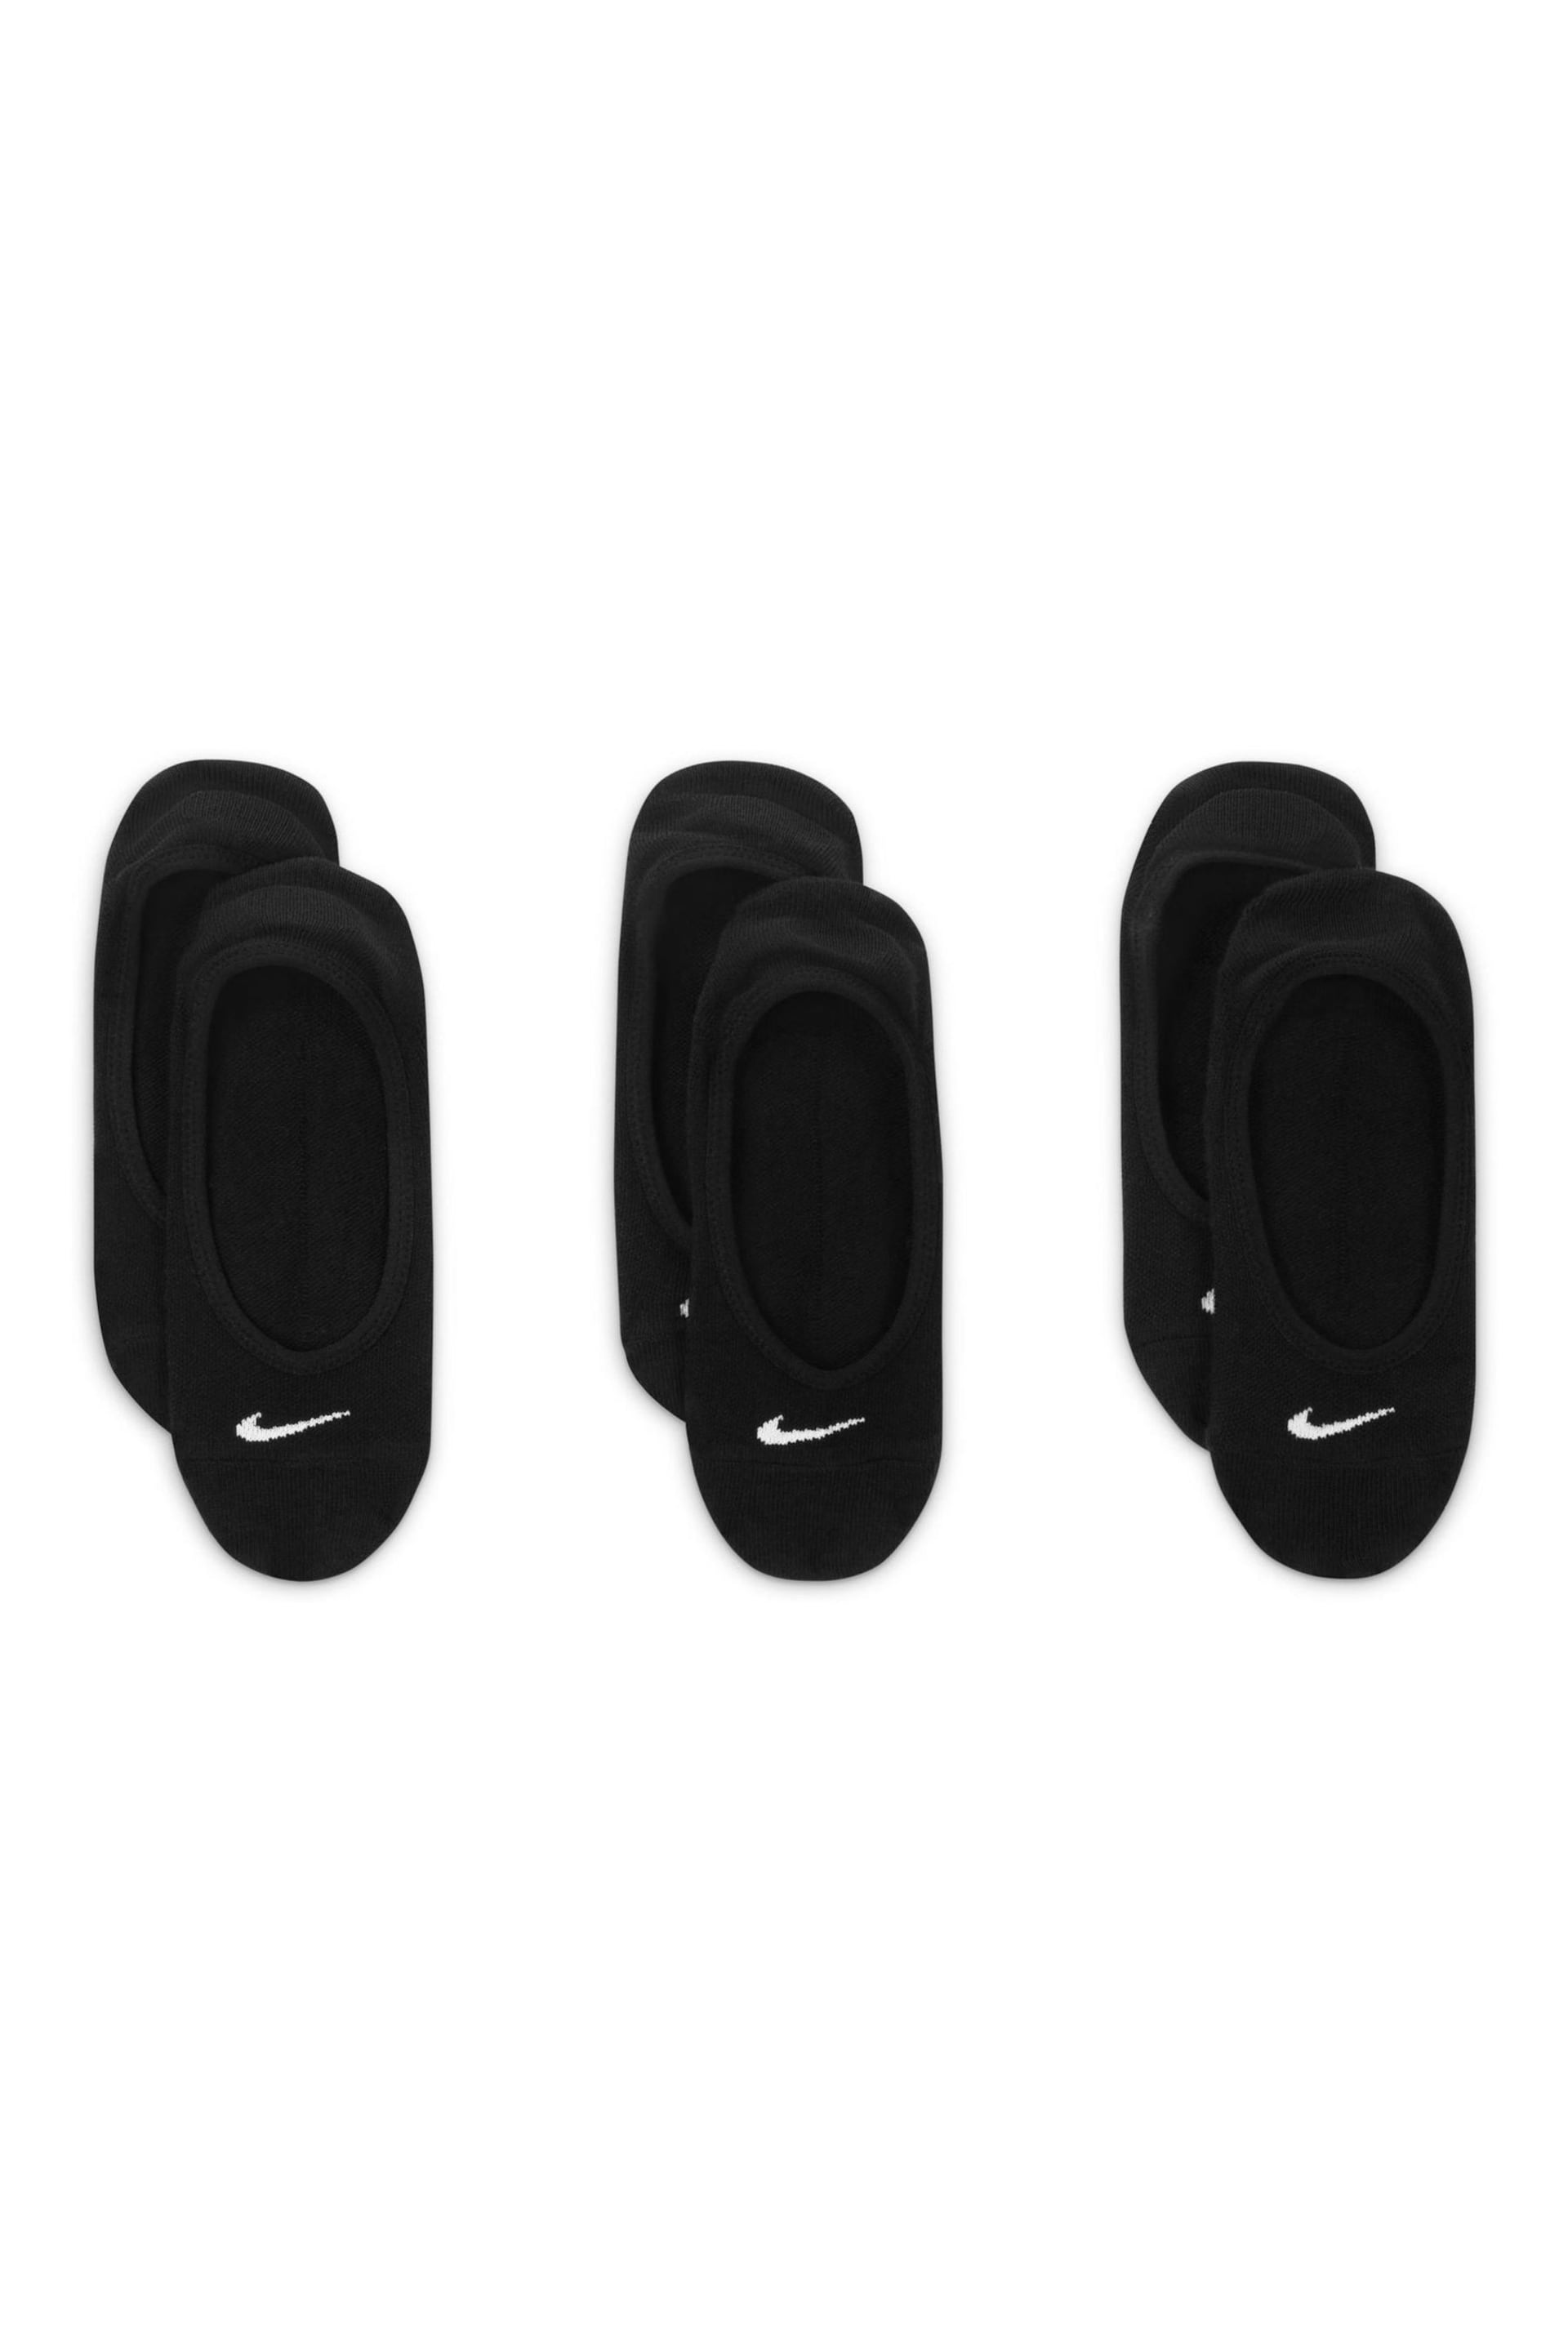 Nike Black Everyday Lightweight Training Footie Socks 3 Pack - Image 2 of 4